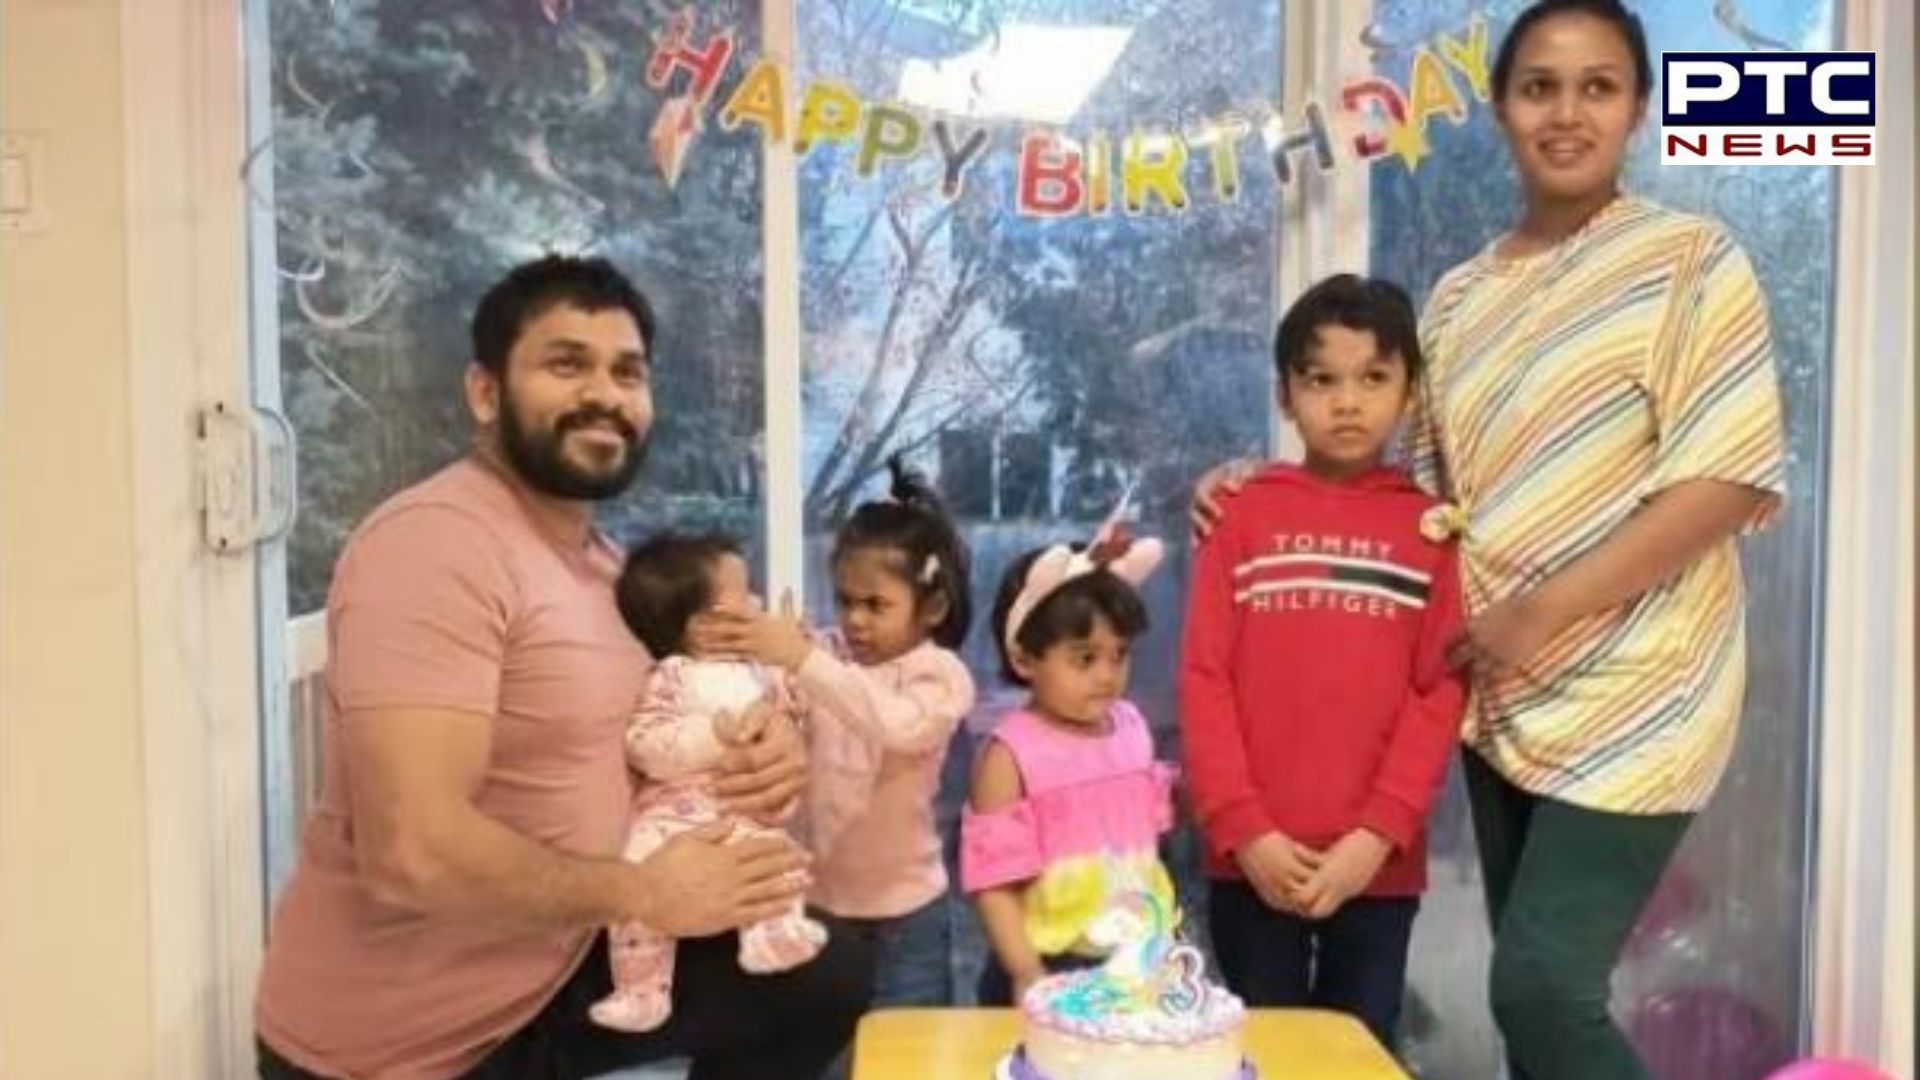 Canada tragedy: Sri Lankan family killed in mass stabbing in south Ottawa